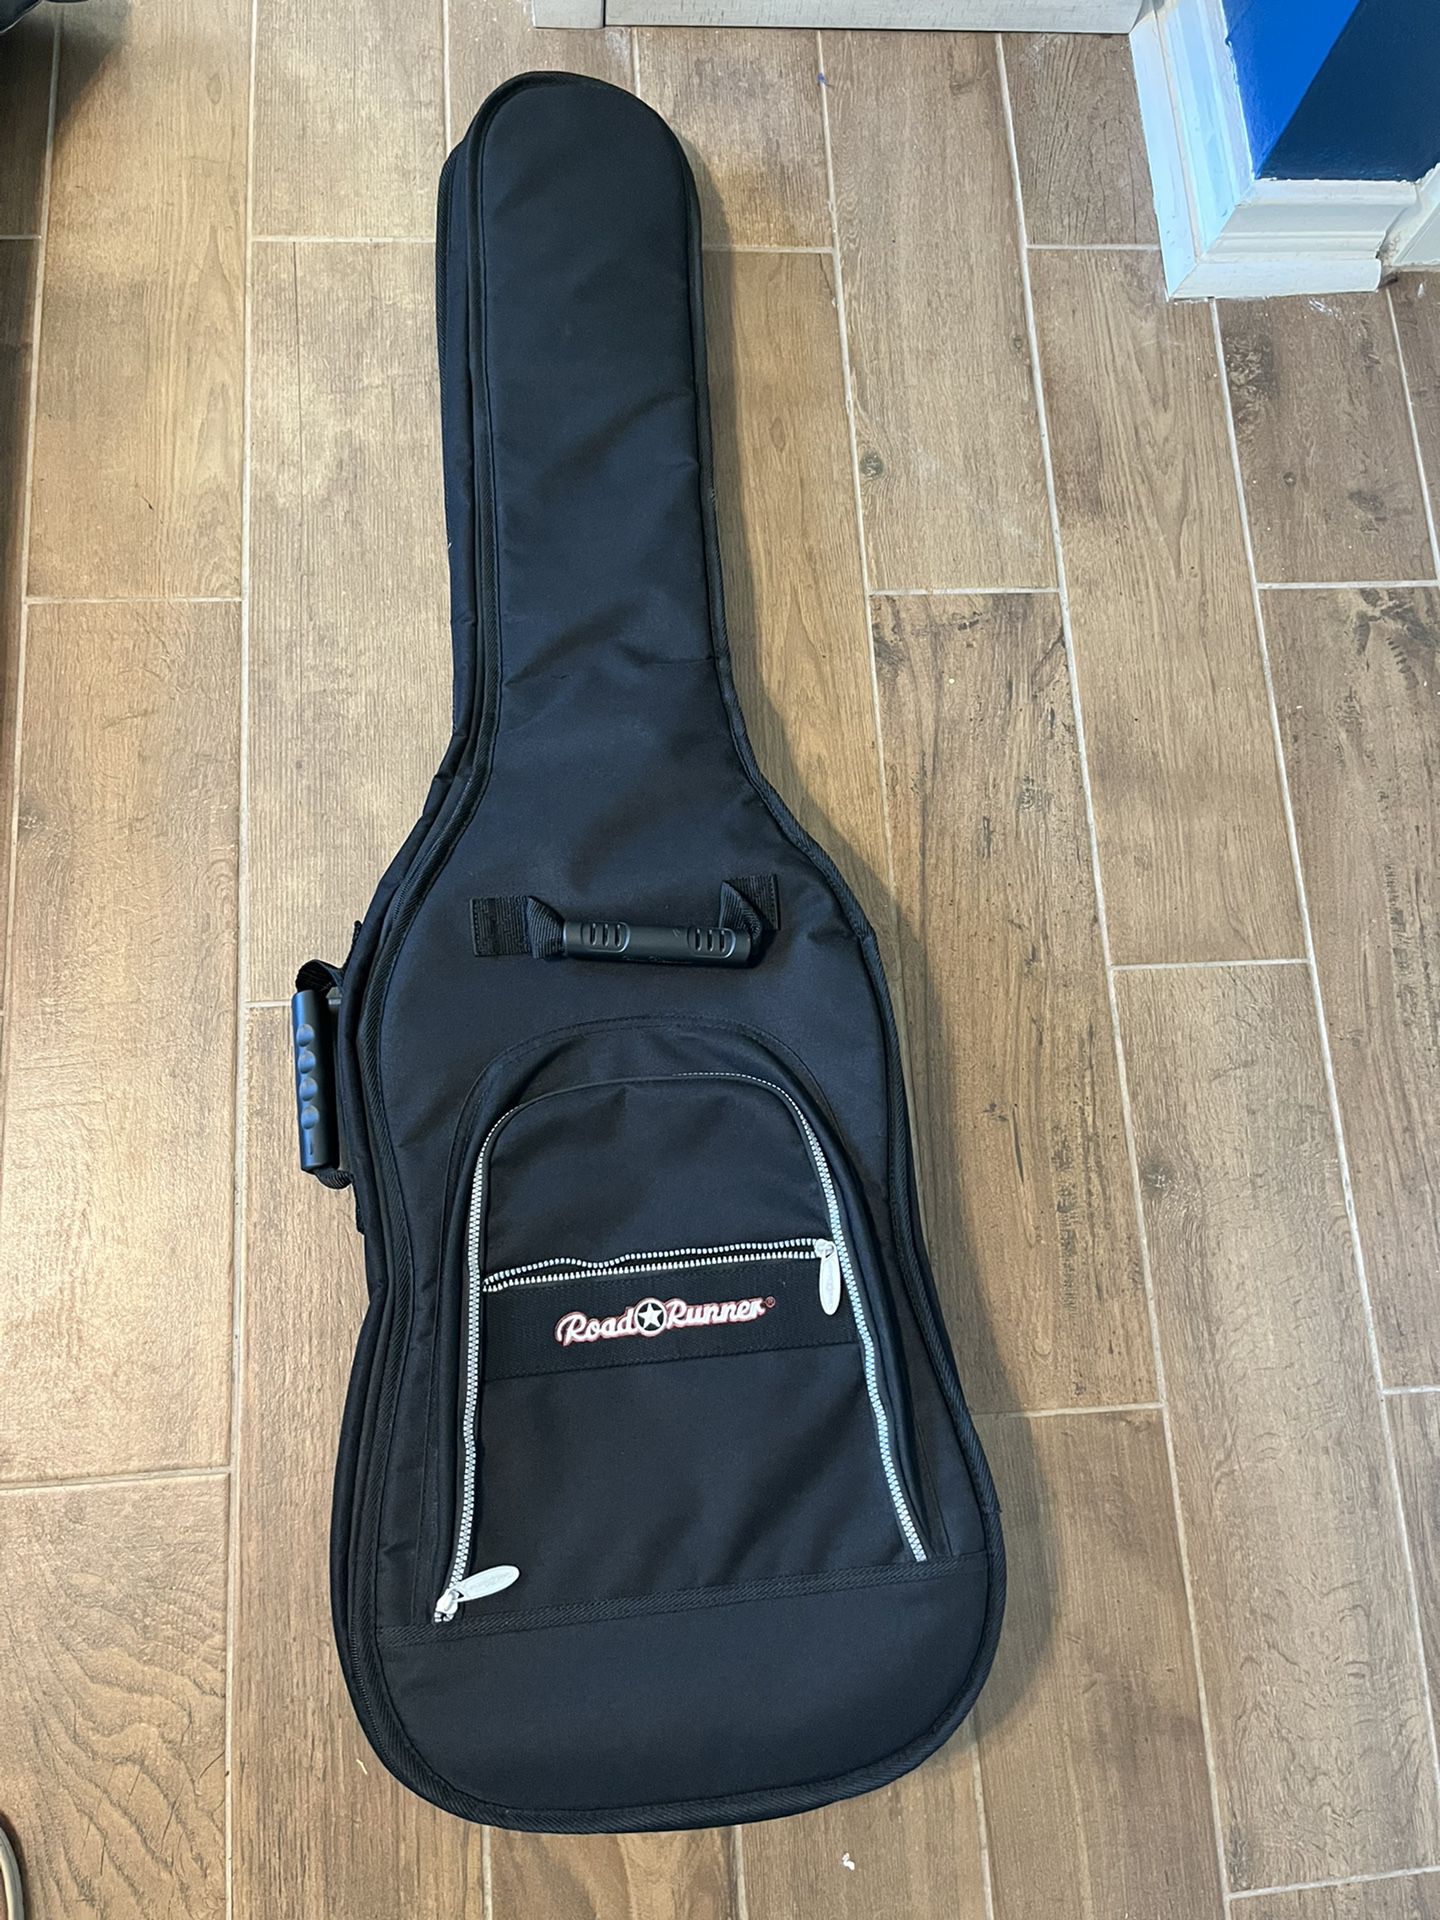 Road Runner Padded Guitar Bag 